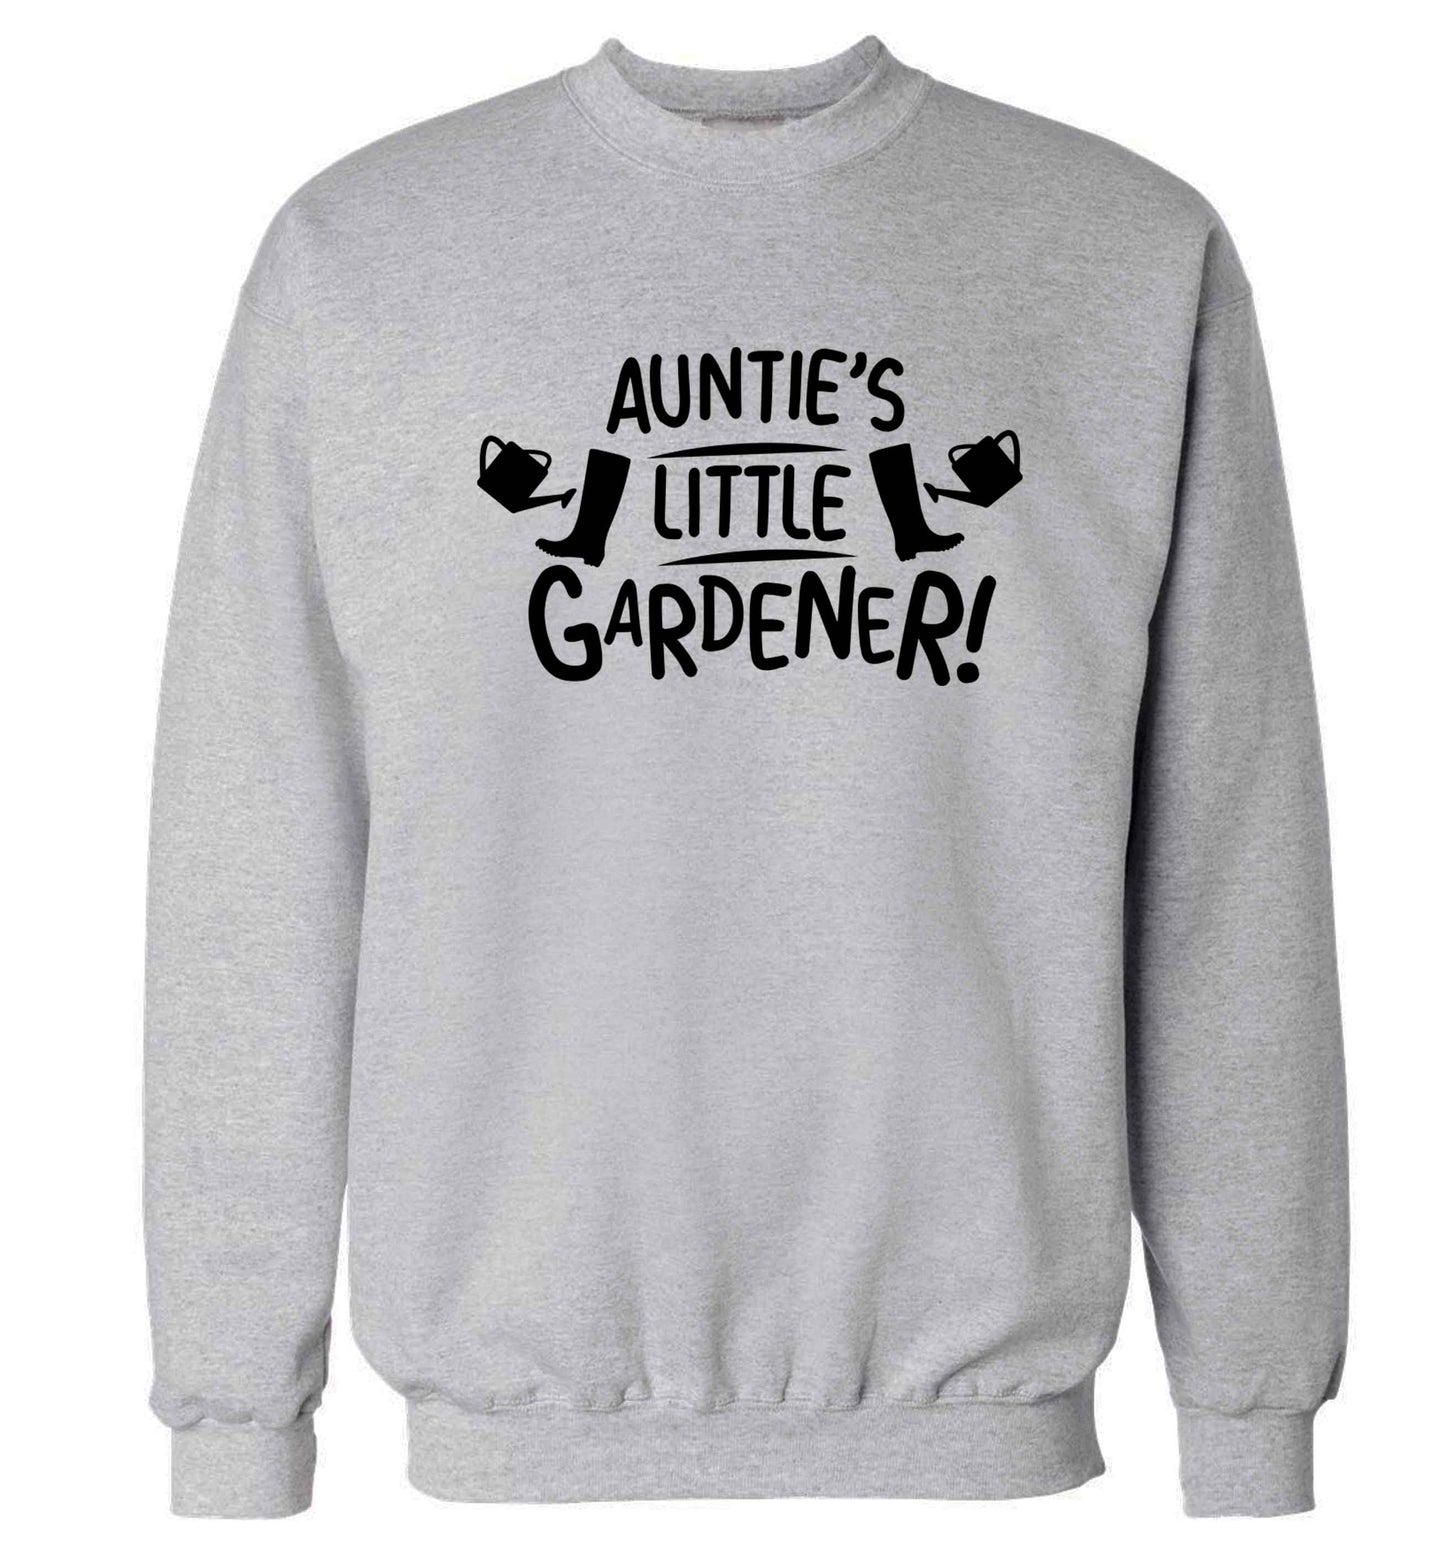 Auntie's little gardener Adult's unisex grey Sweater 2XL